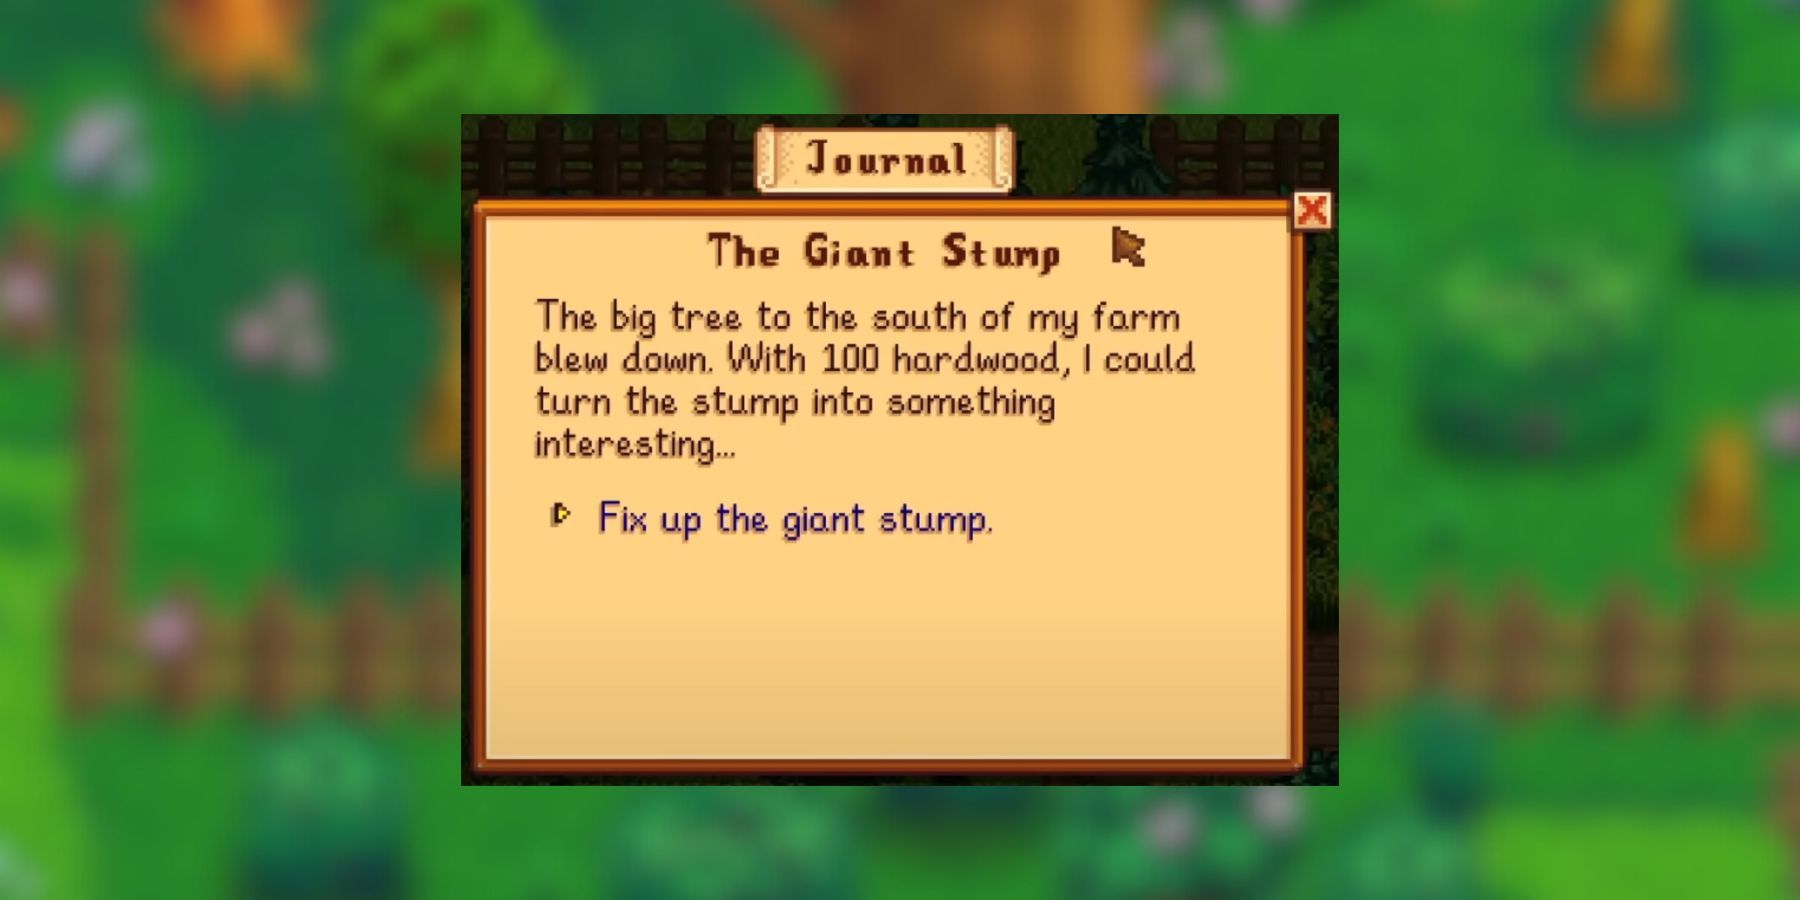 the giant stump quest description in stardew valley 1.6.